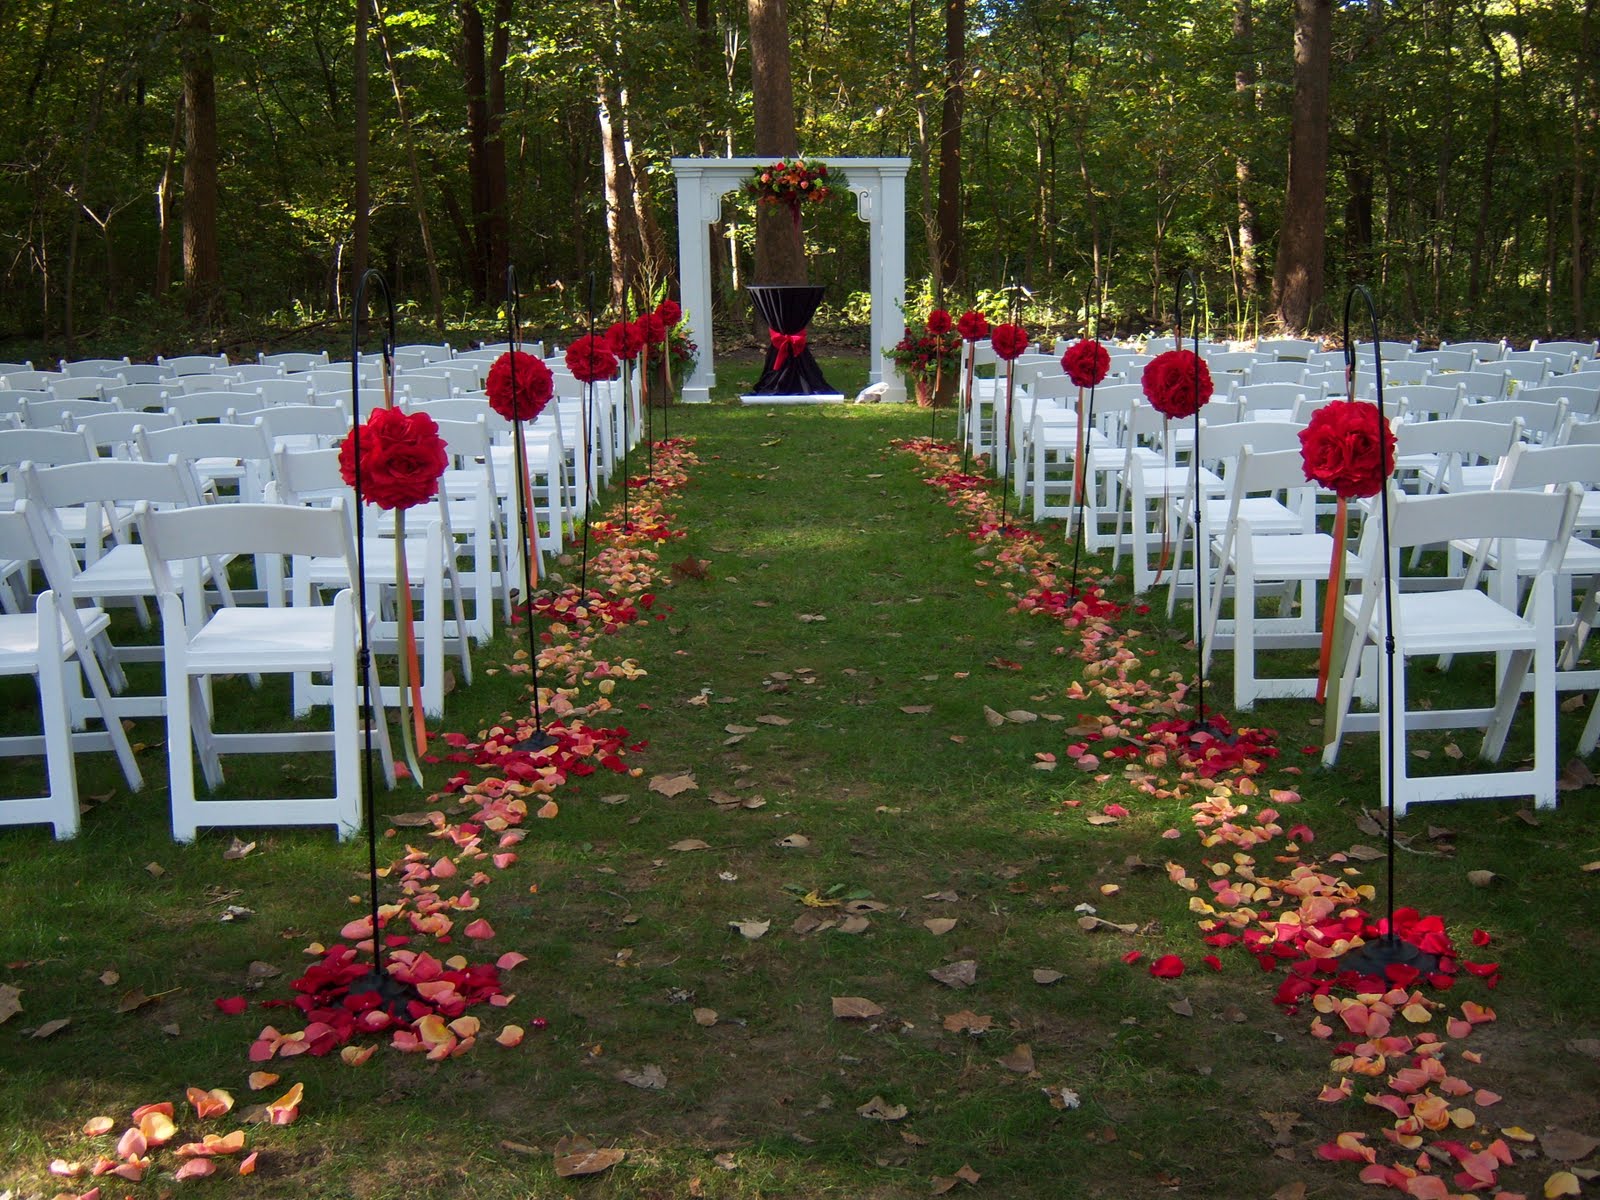 Lovely Weddings: Fall Outdoor Wedding | Fall Outdoor ...